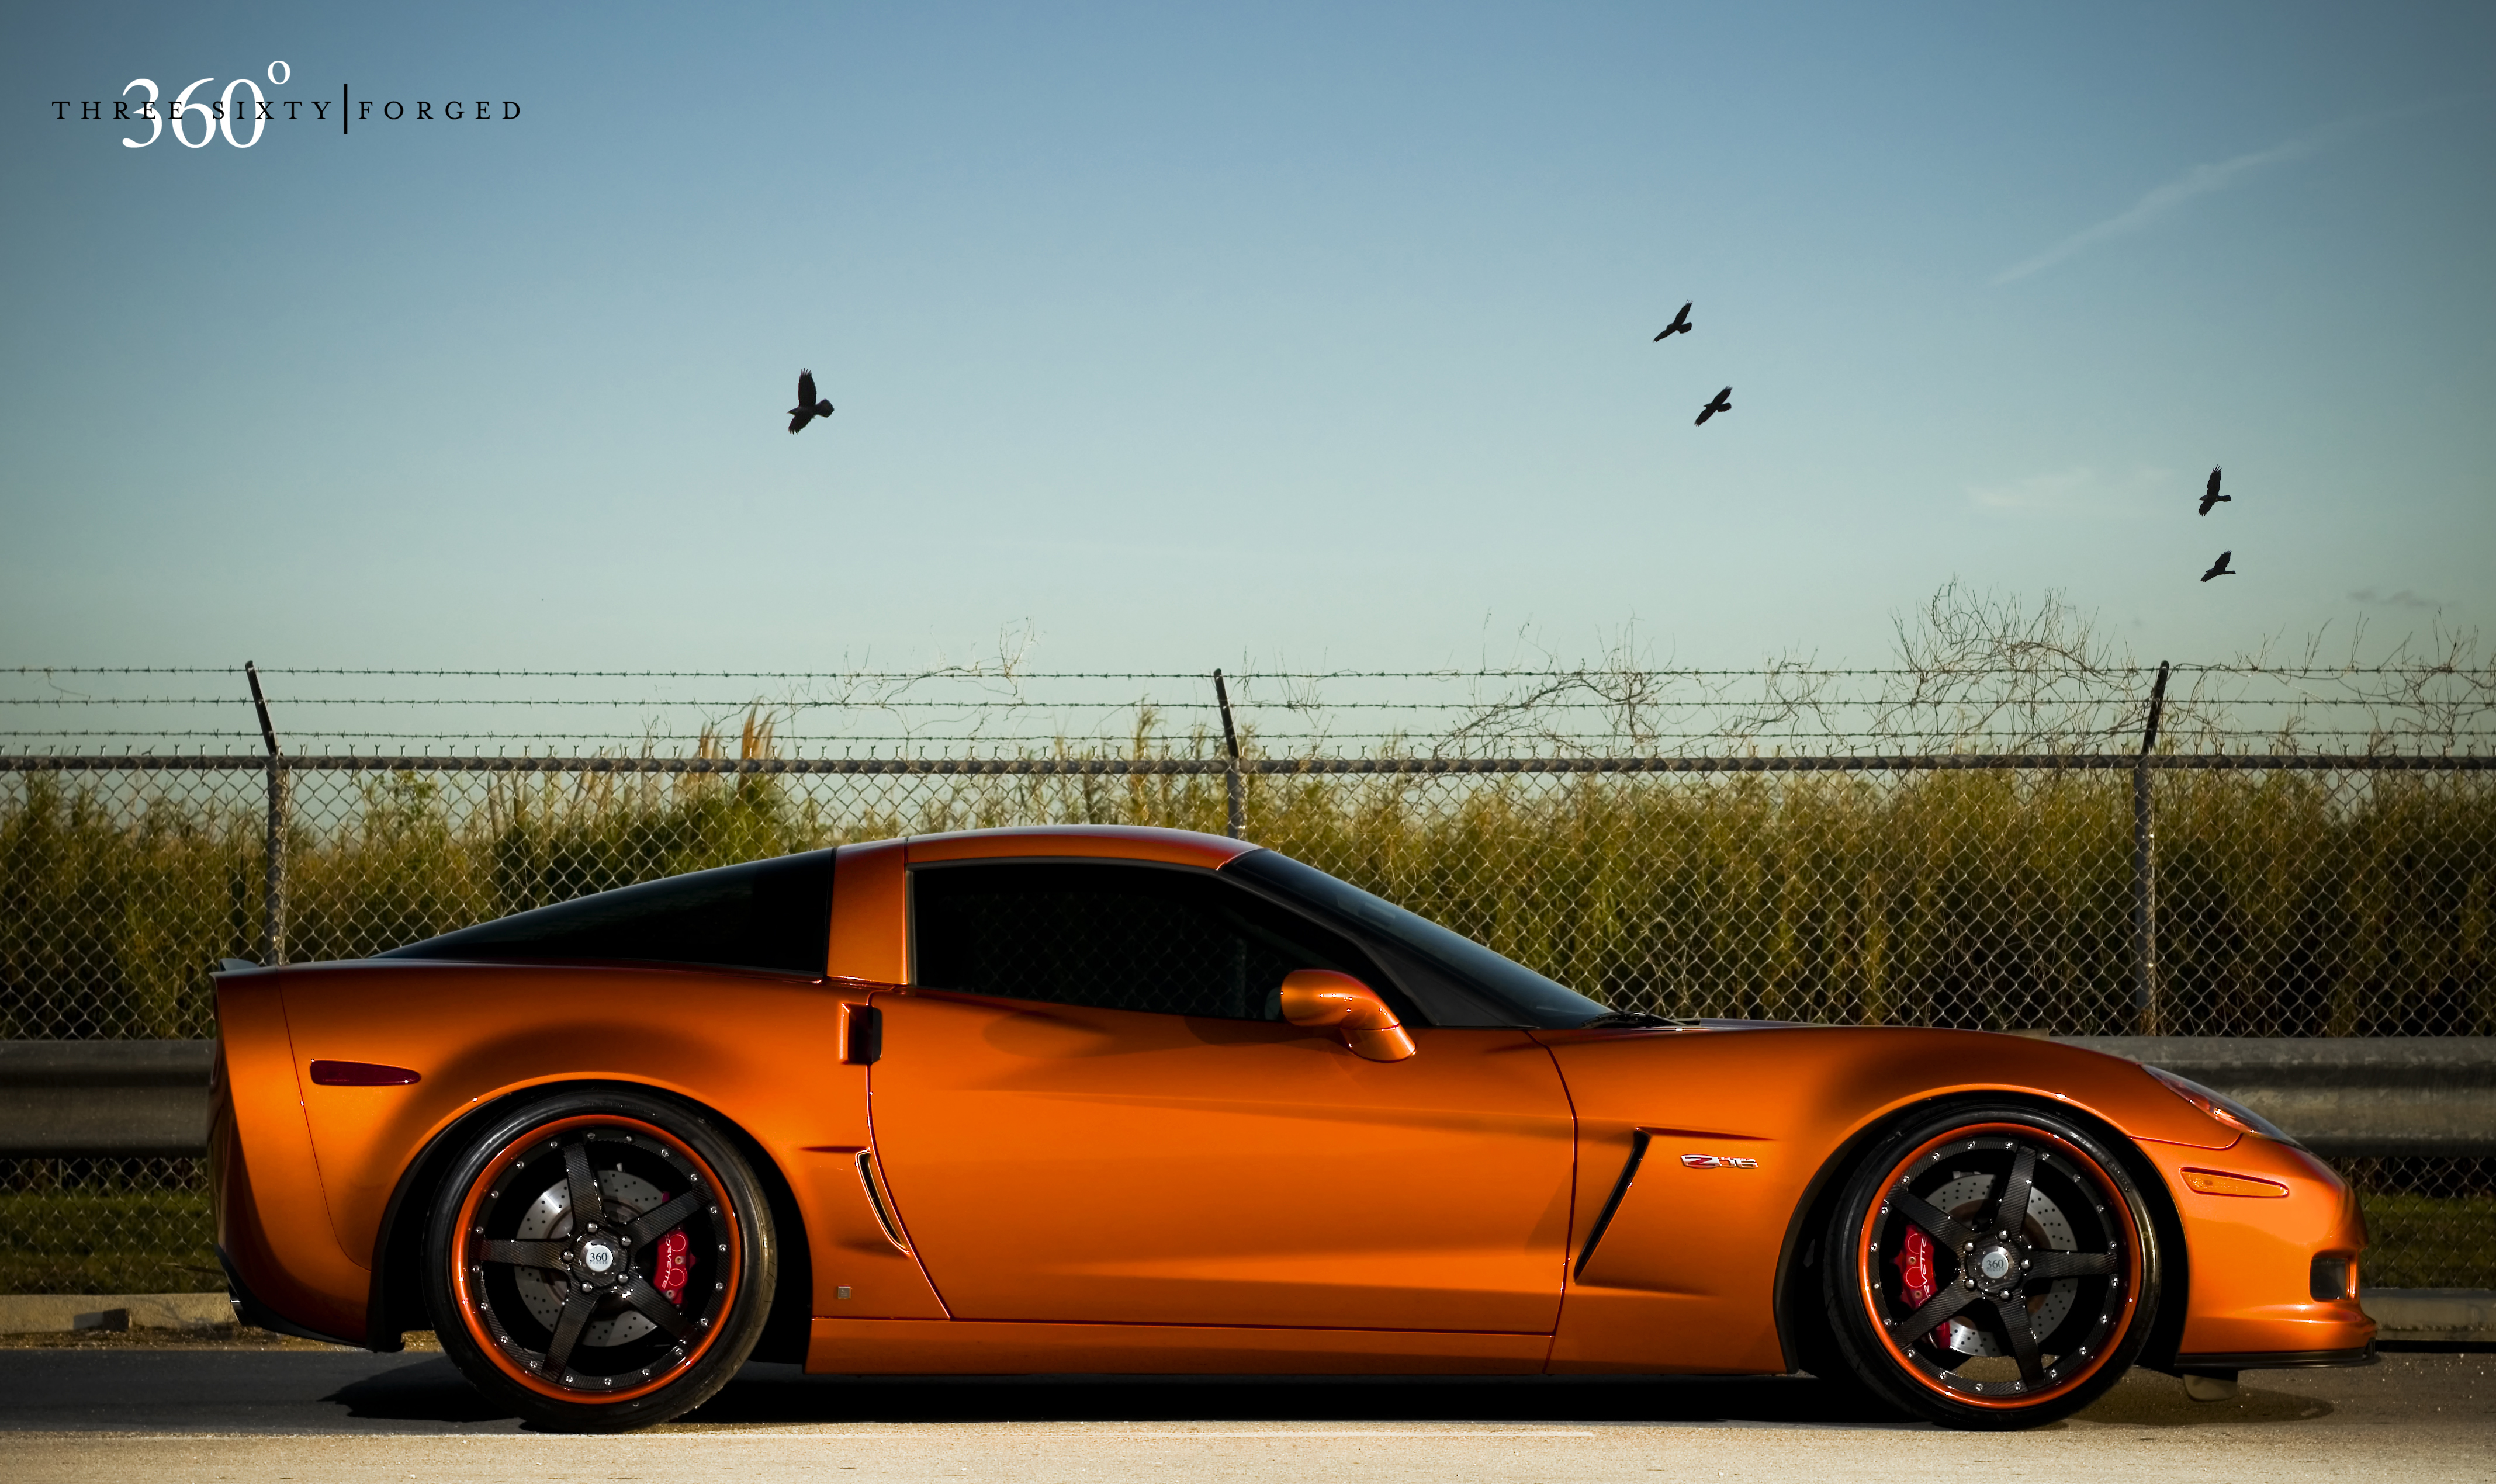 atomic, Orange, Corvette, Z06, On, 360, Forged, Cf, Straight Wallpaper